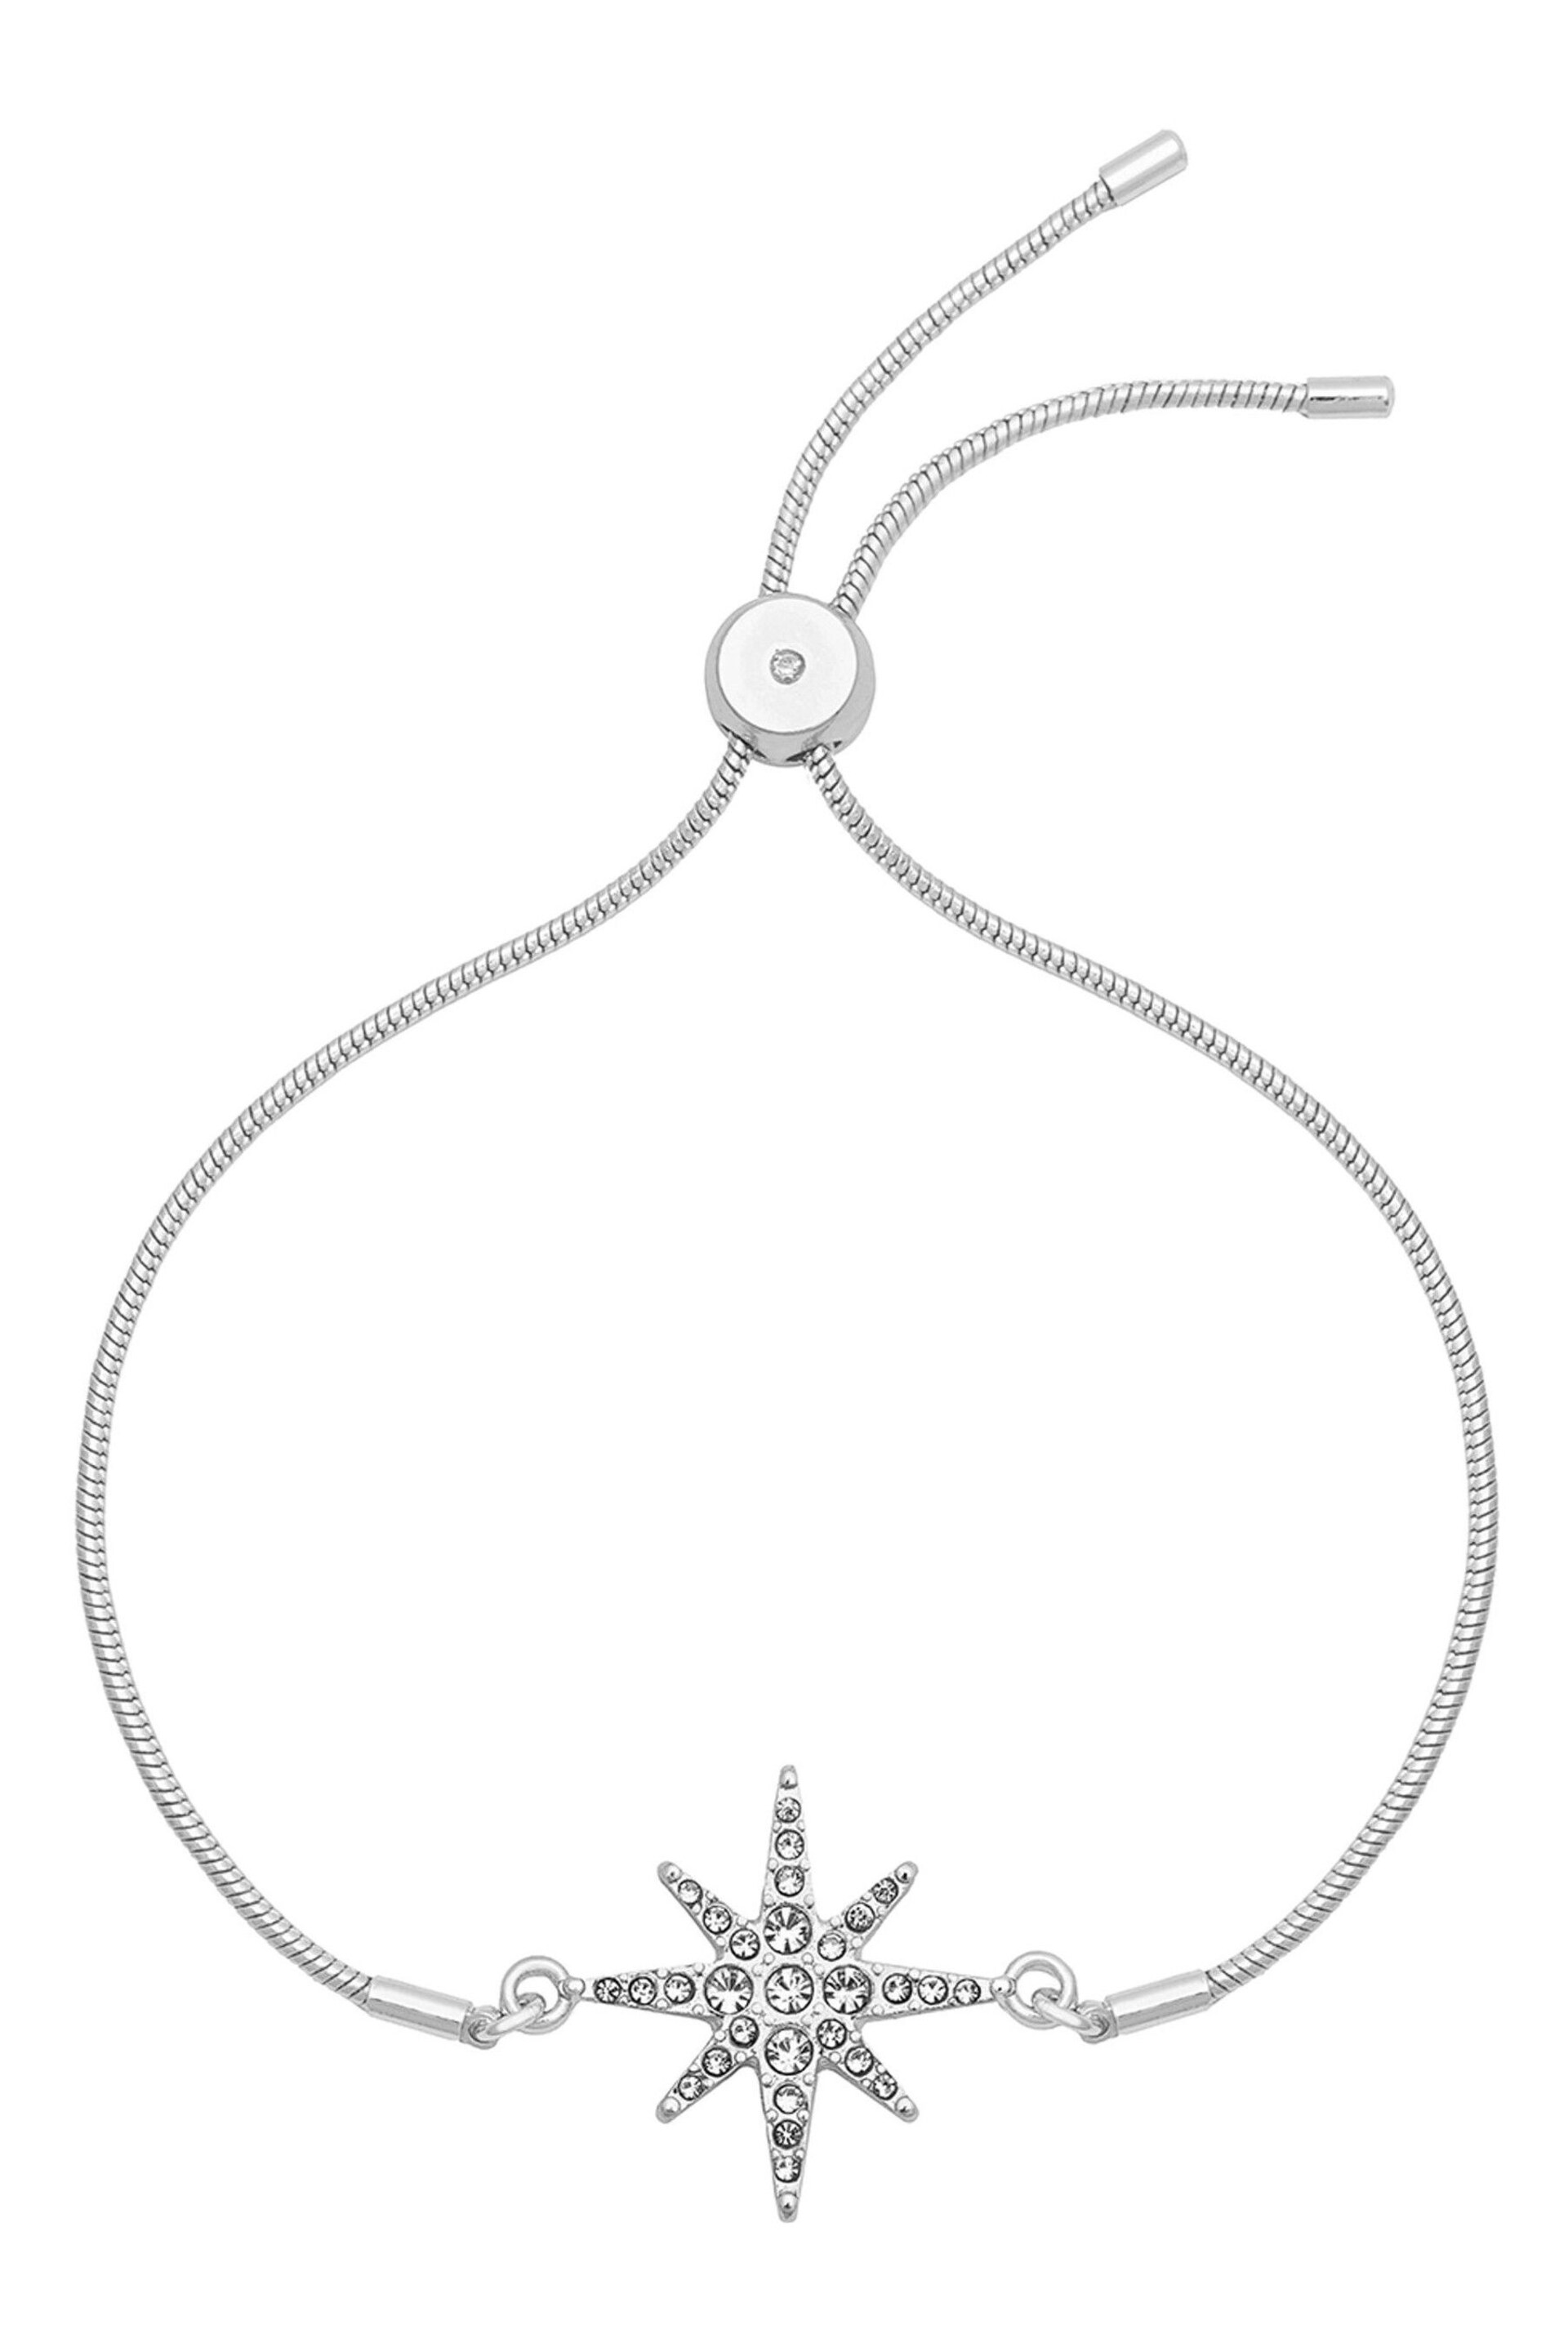 Caramel Jewellery London Silver 'Superstar' Bracelet - Image 3 of 4